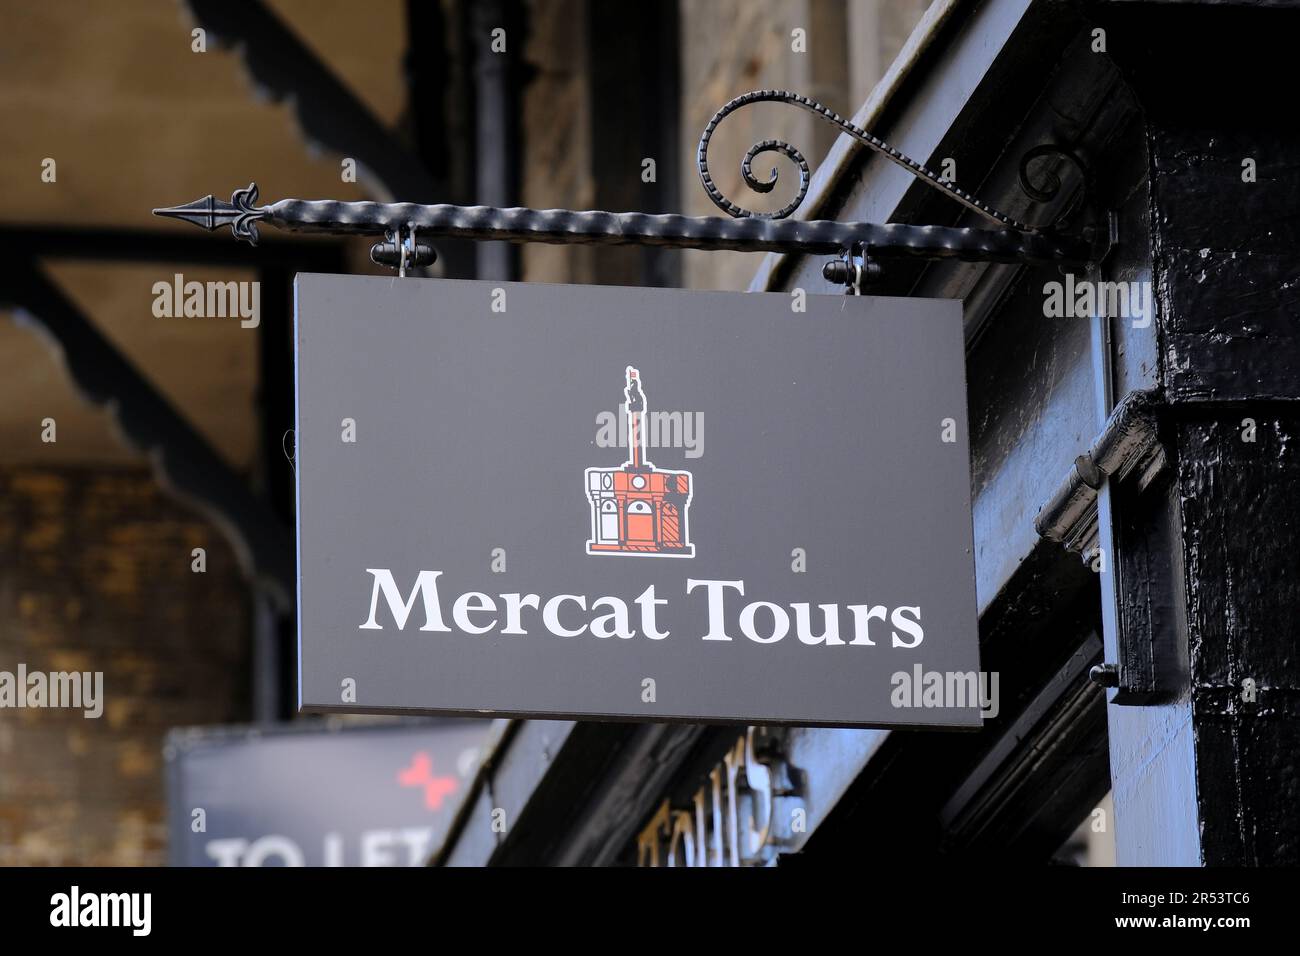 Mercat Tours sign, Edinburgh, Scotland Stock Photo